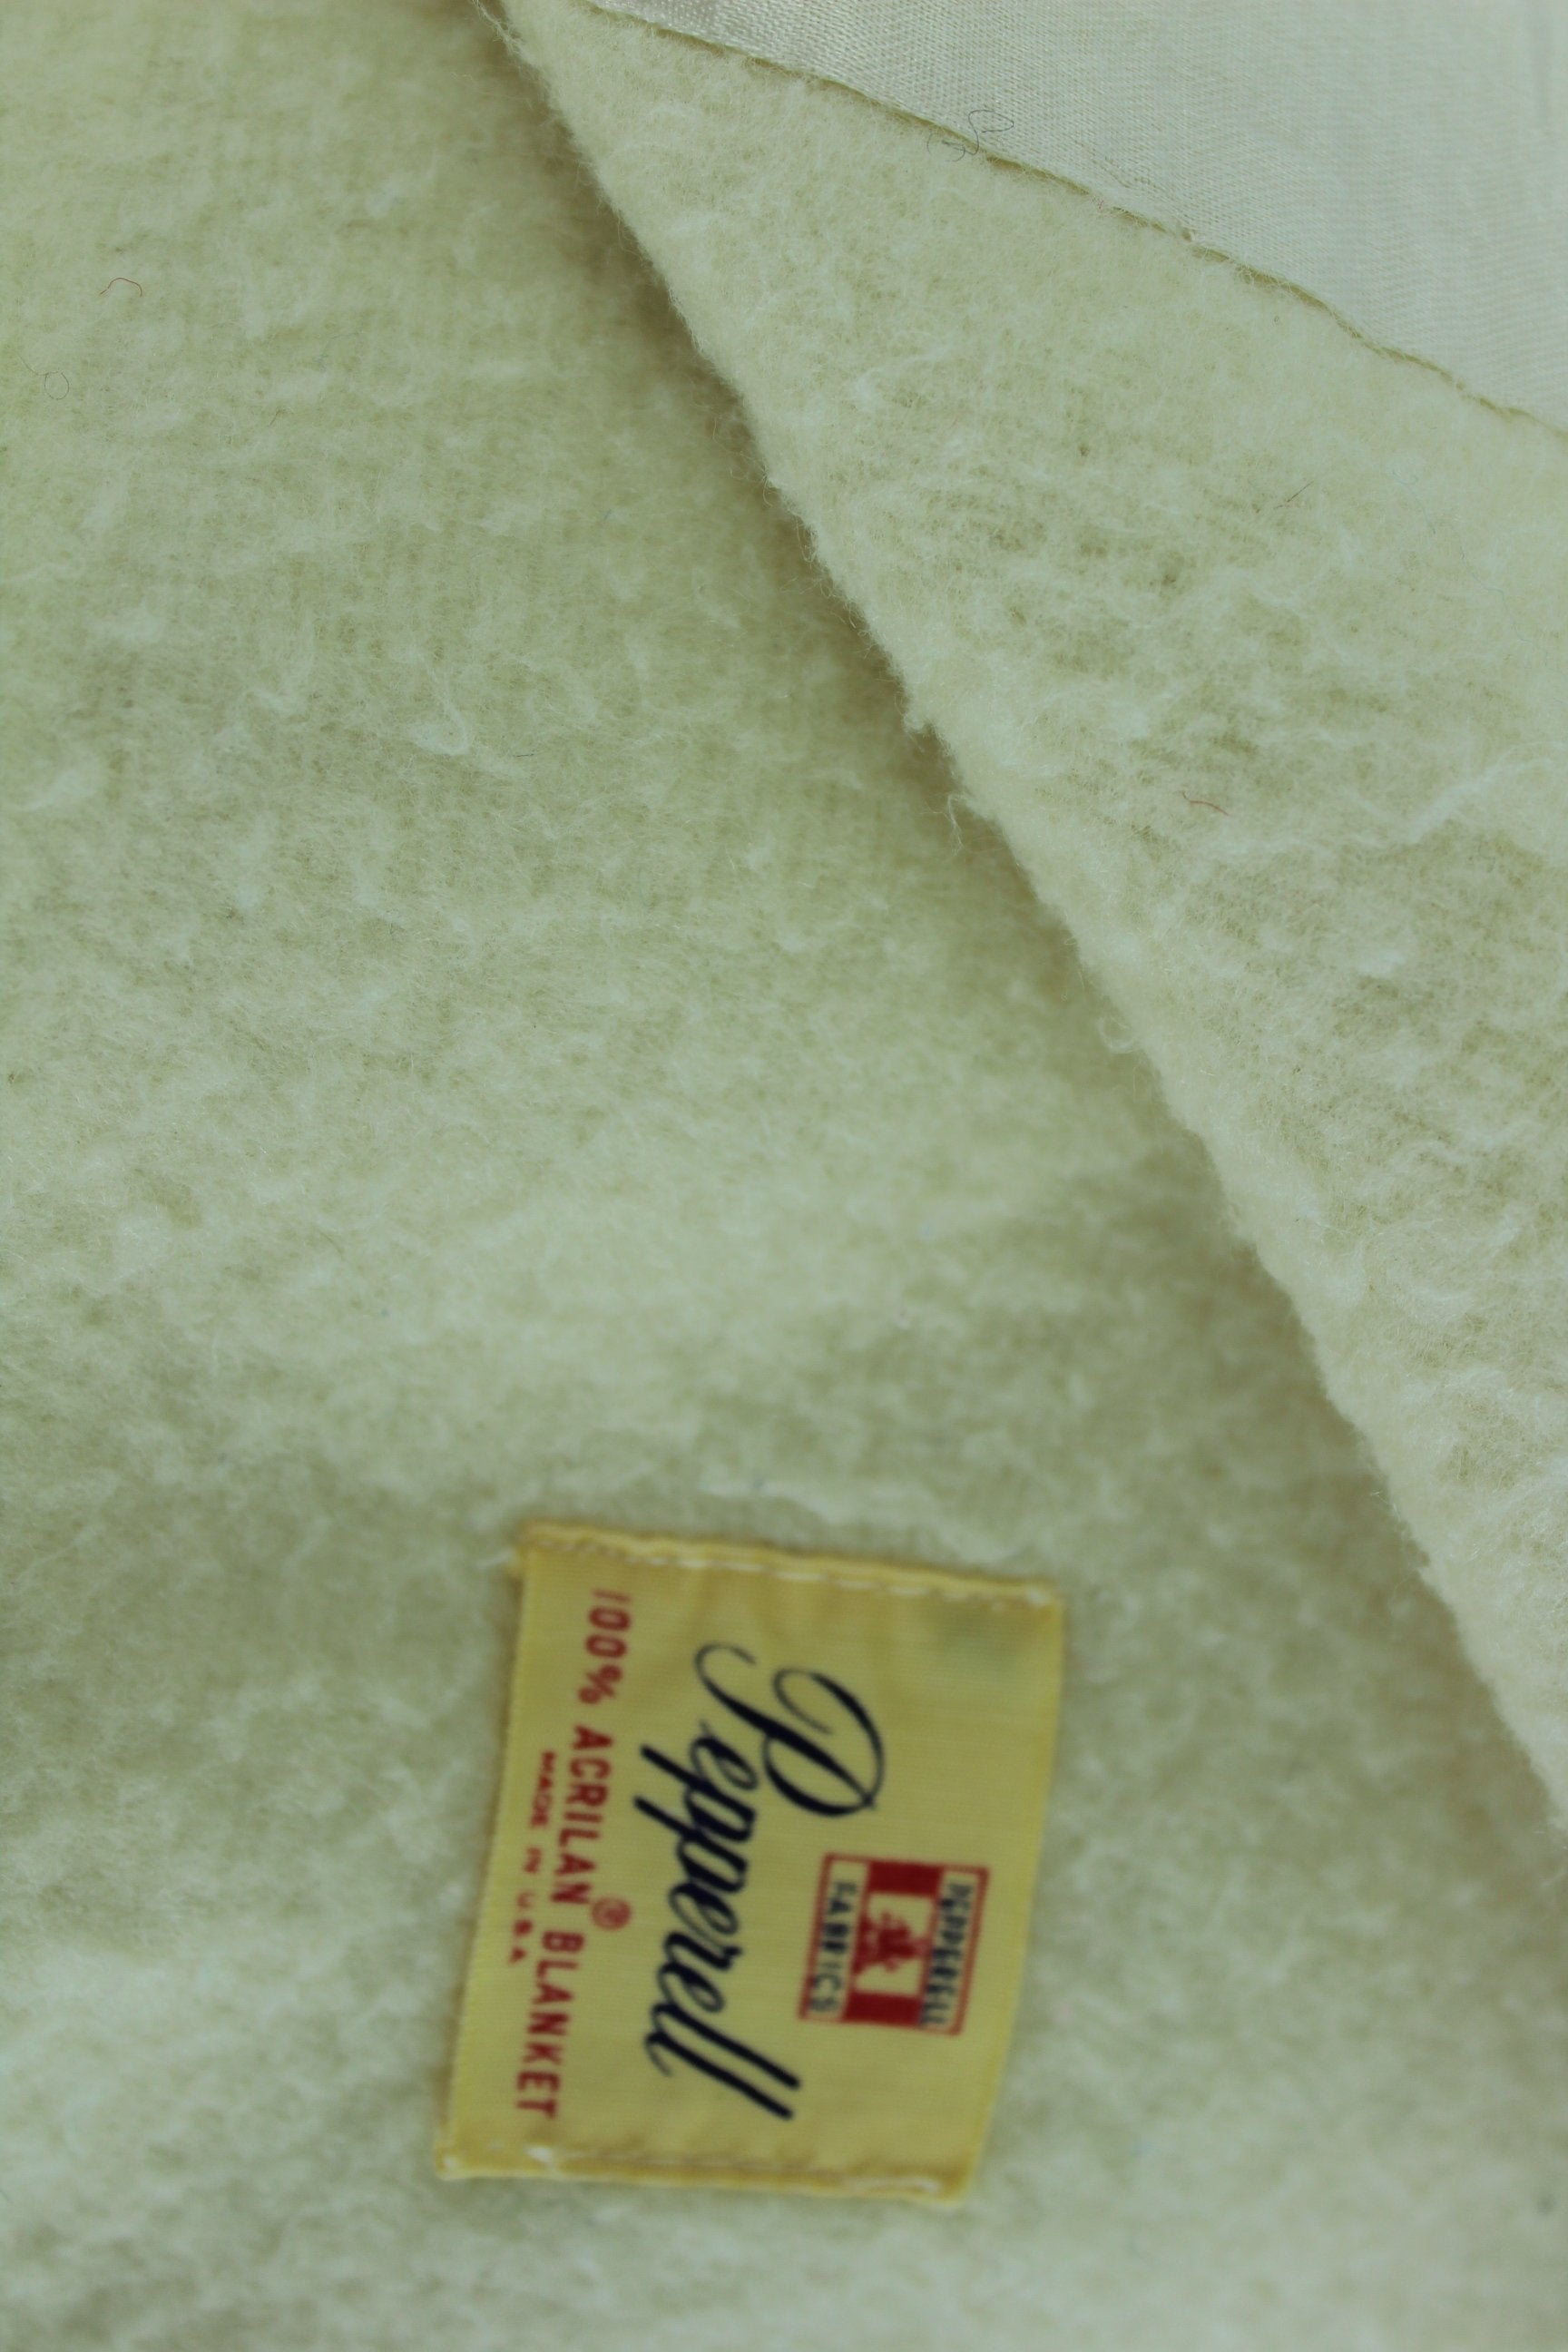 Vintage Pepperell Blanket Ivory Acrilan Acrylic Satin Binding 73" X 86" orig tag